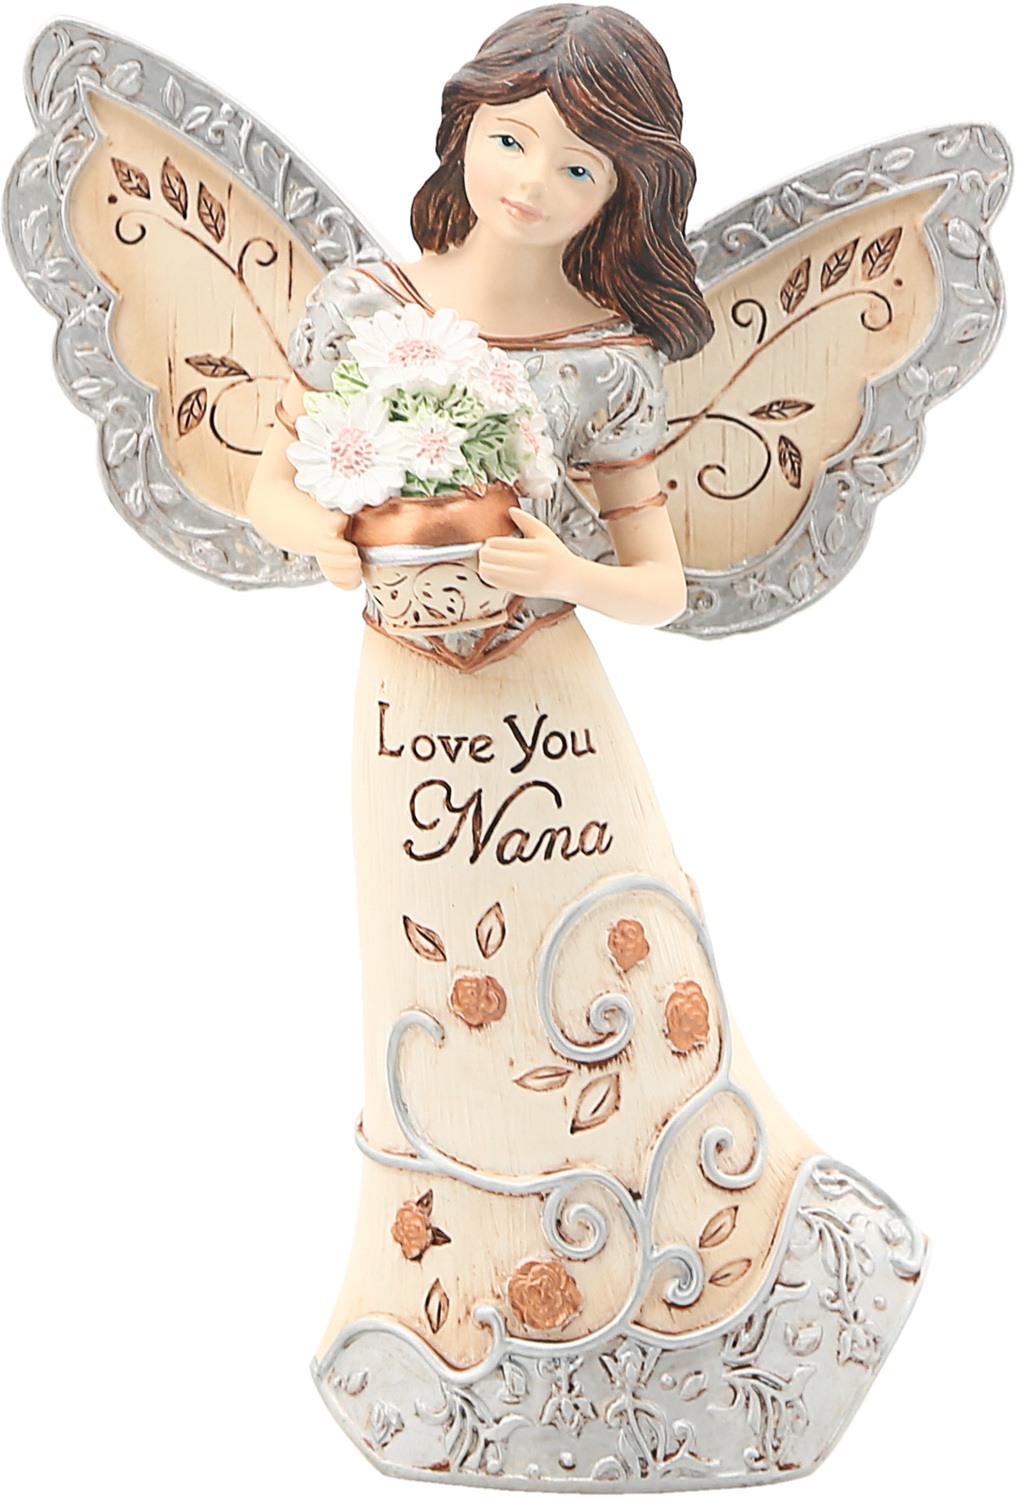 Love You Nana by Elements - Love You Nana - 5.5" Angel Holding Flowers